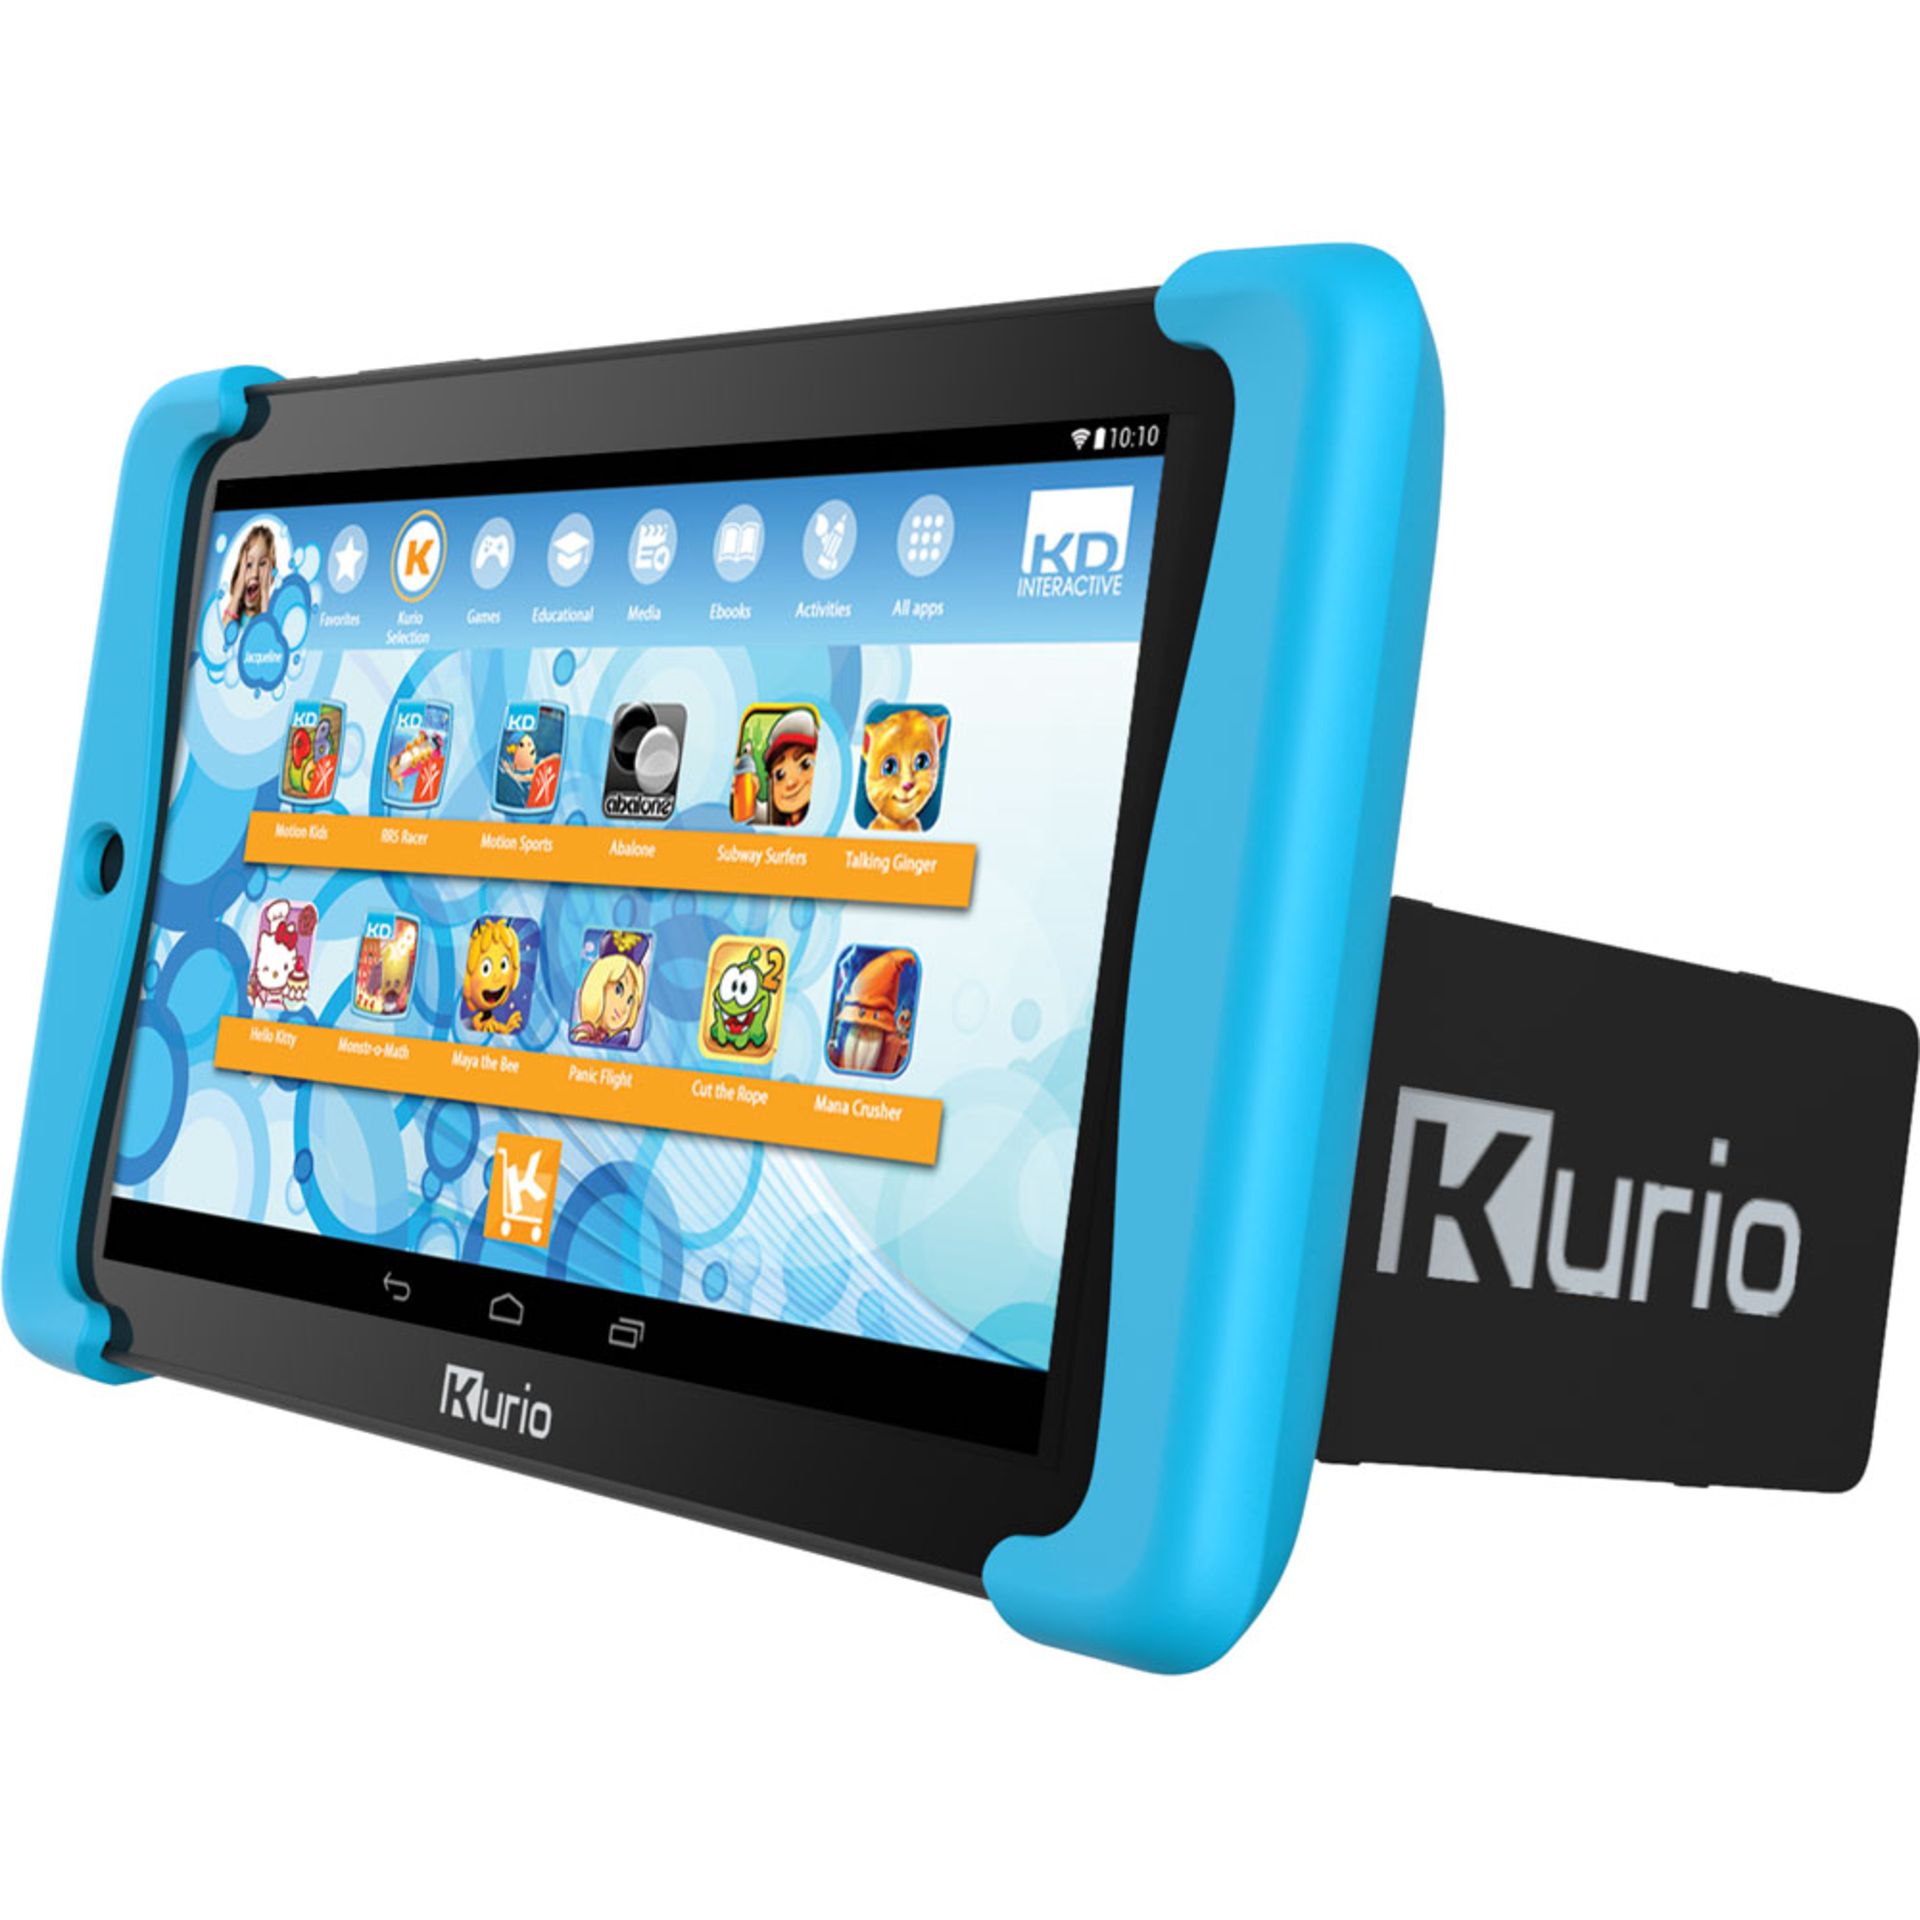 V Grade C Kurio Tab 2 7" Android Tablet - 8GB Storage - Android 5.0 - Quad Core Processor - Pre